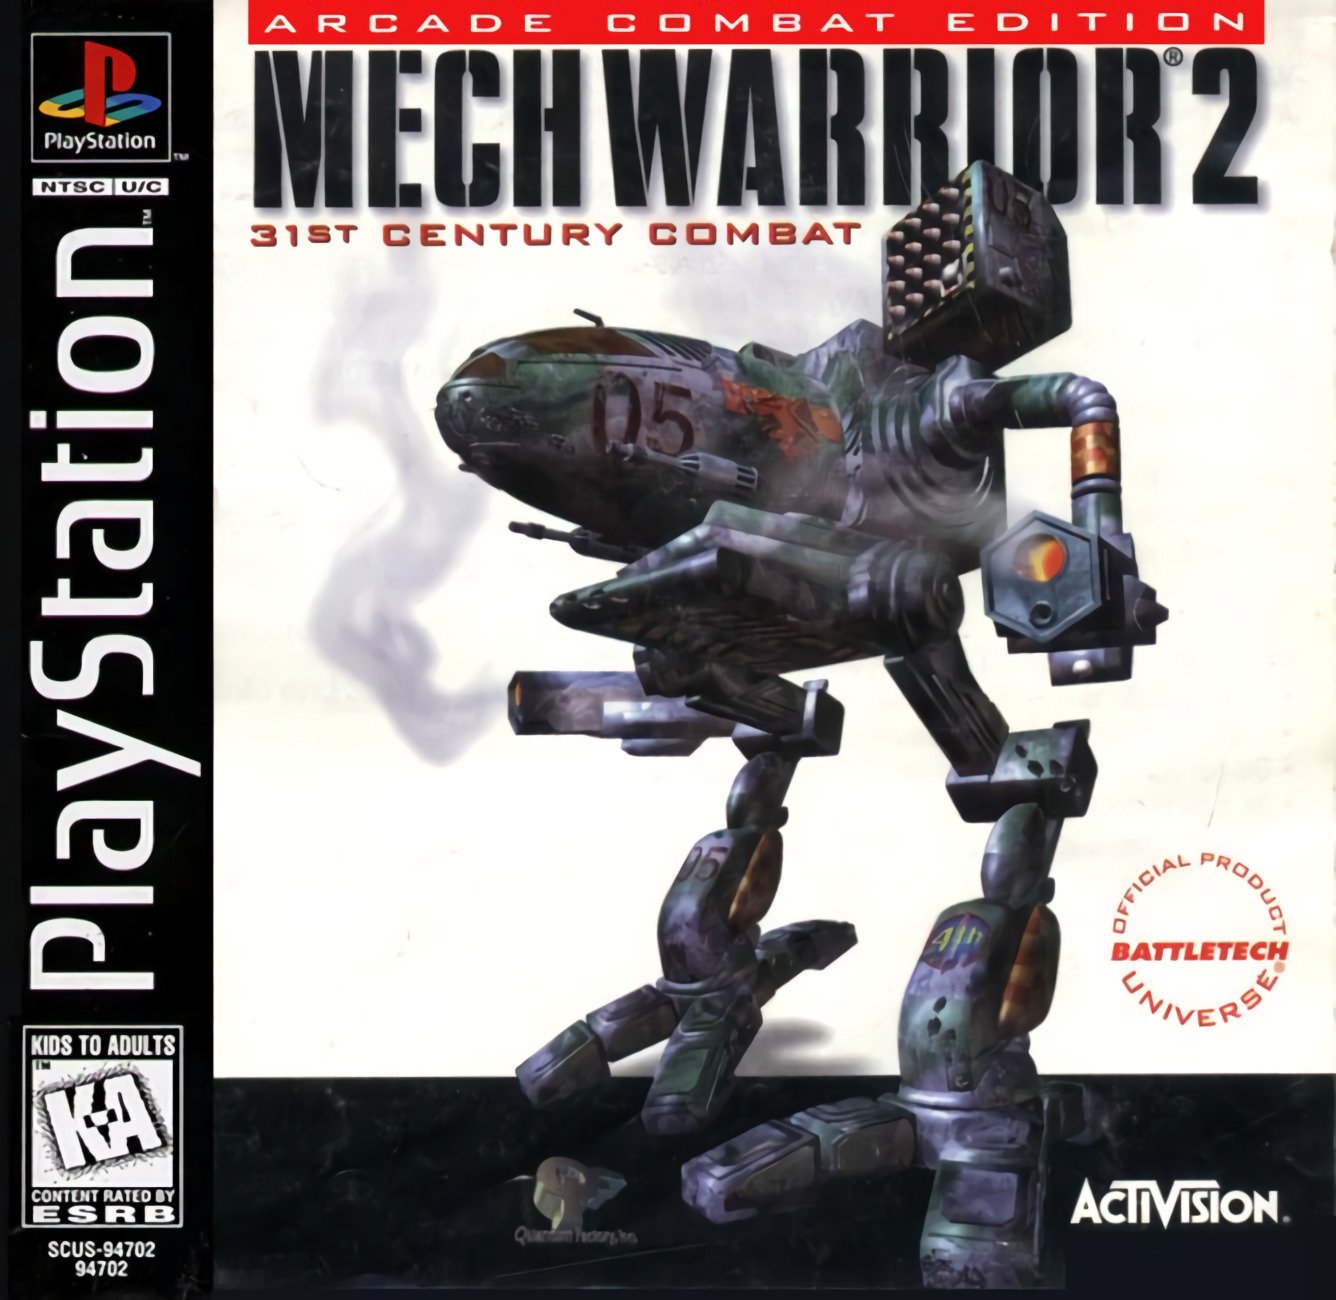 MechWarrior 2: 31st Century Combat - Arcade Combat Edition